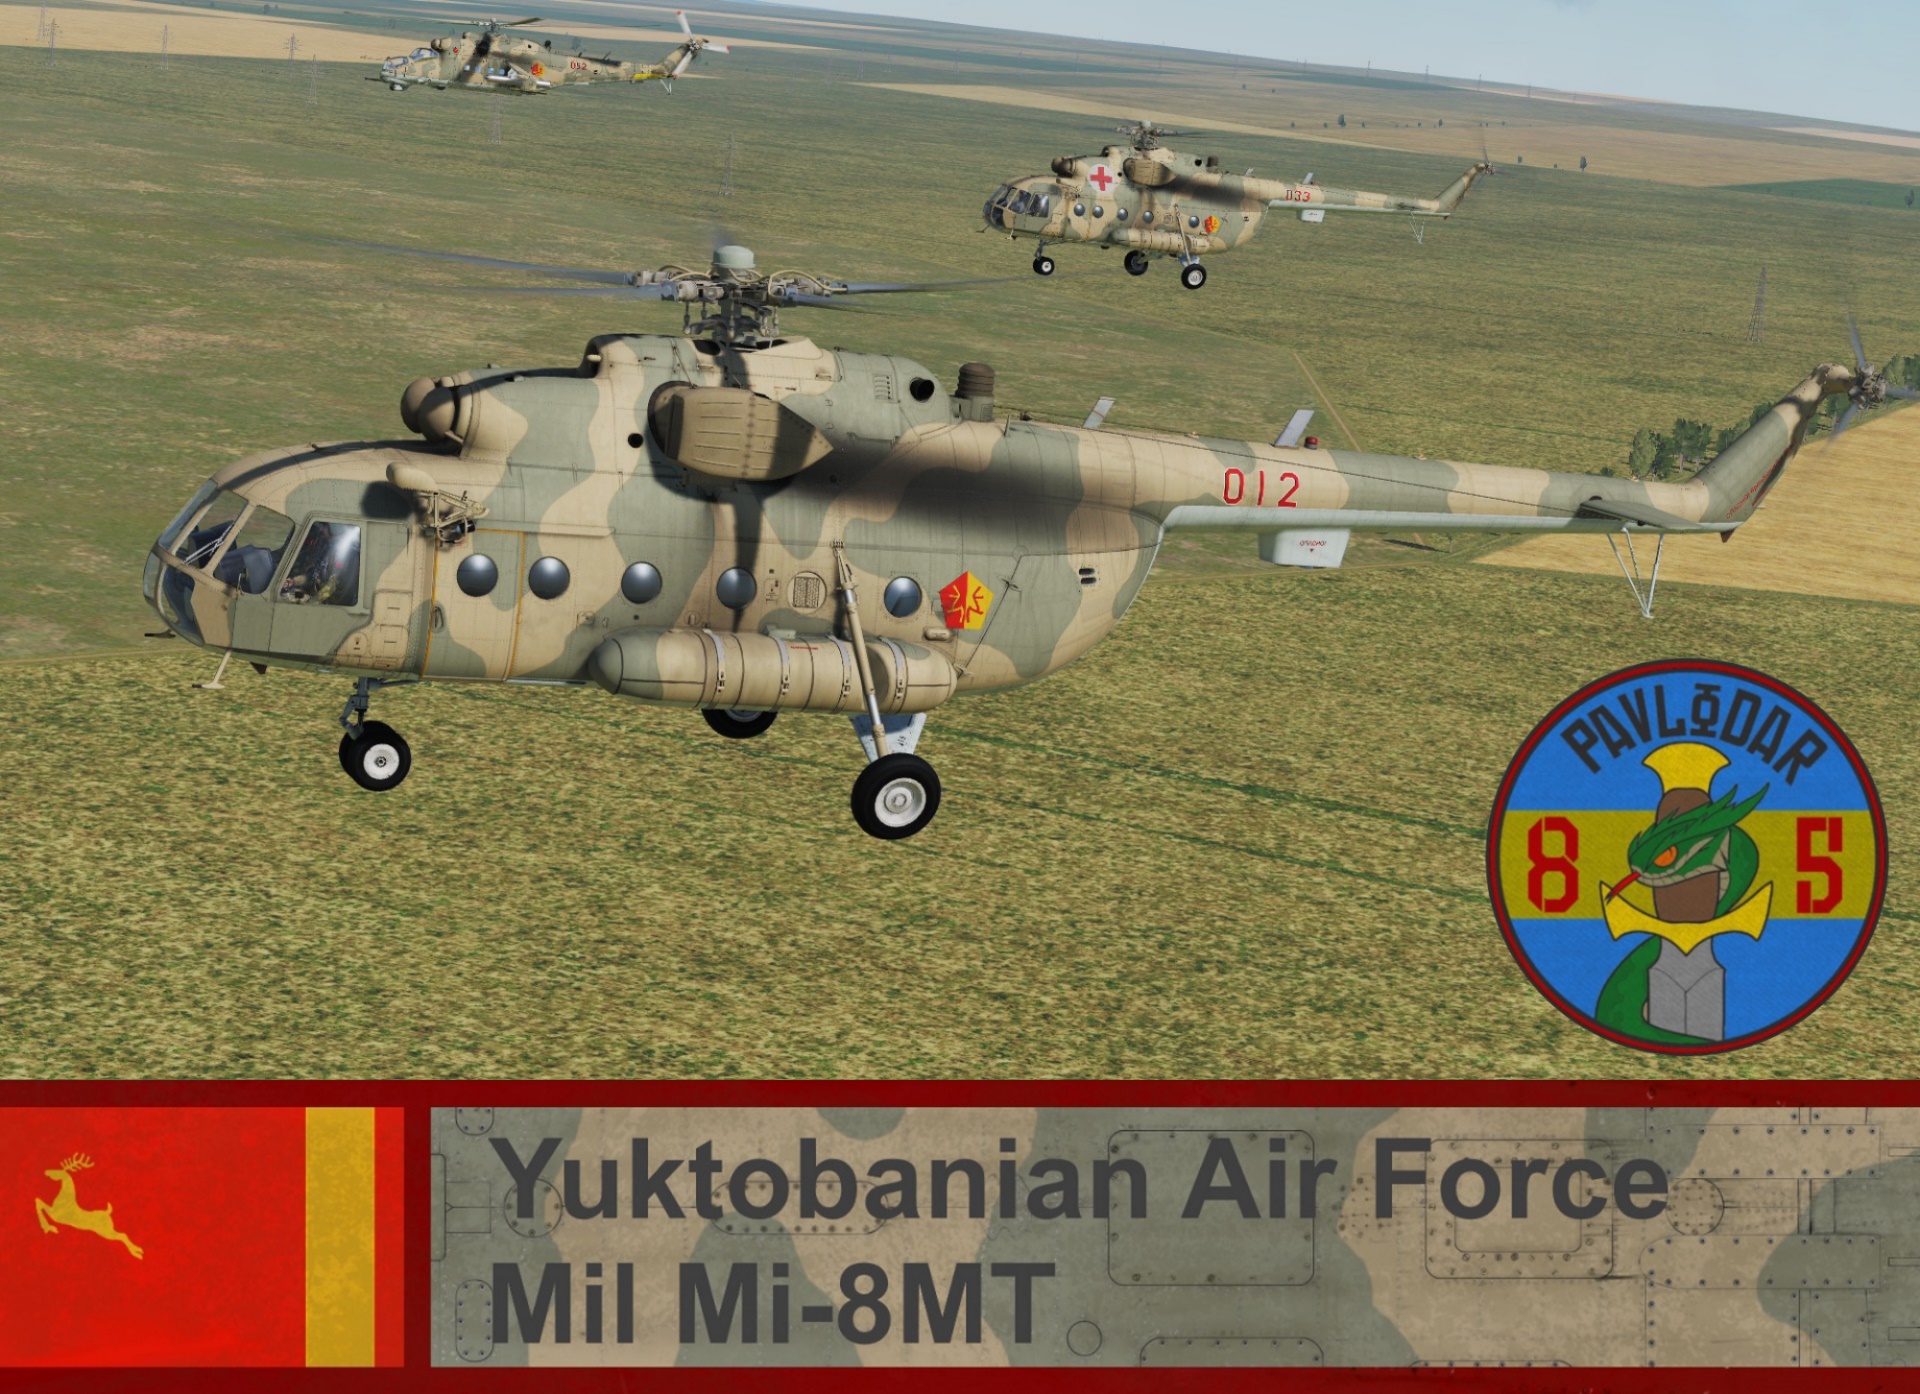 Yuktobanian Air Force Mi-8MT - Ace Combat 5 (85 IHS) *UPDATED*